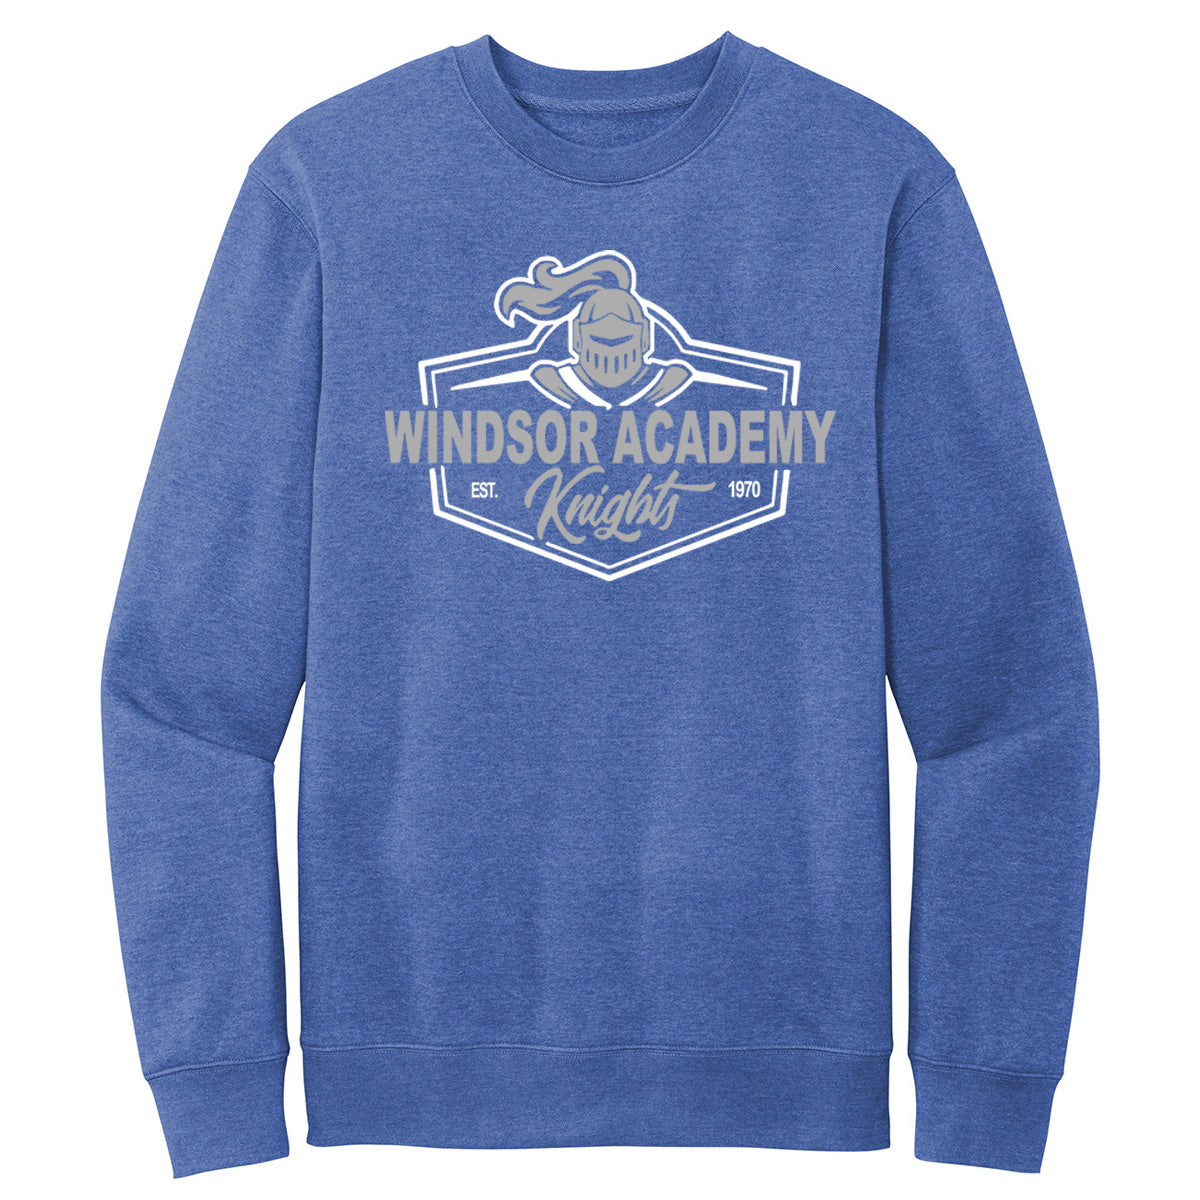 Windsor - Windsor Academy Knight Est Sweatshirt - Royal Frost (DT6104) - Southern Grace Creations